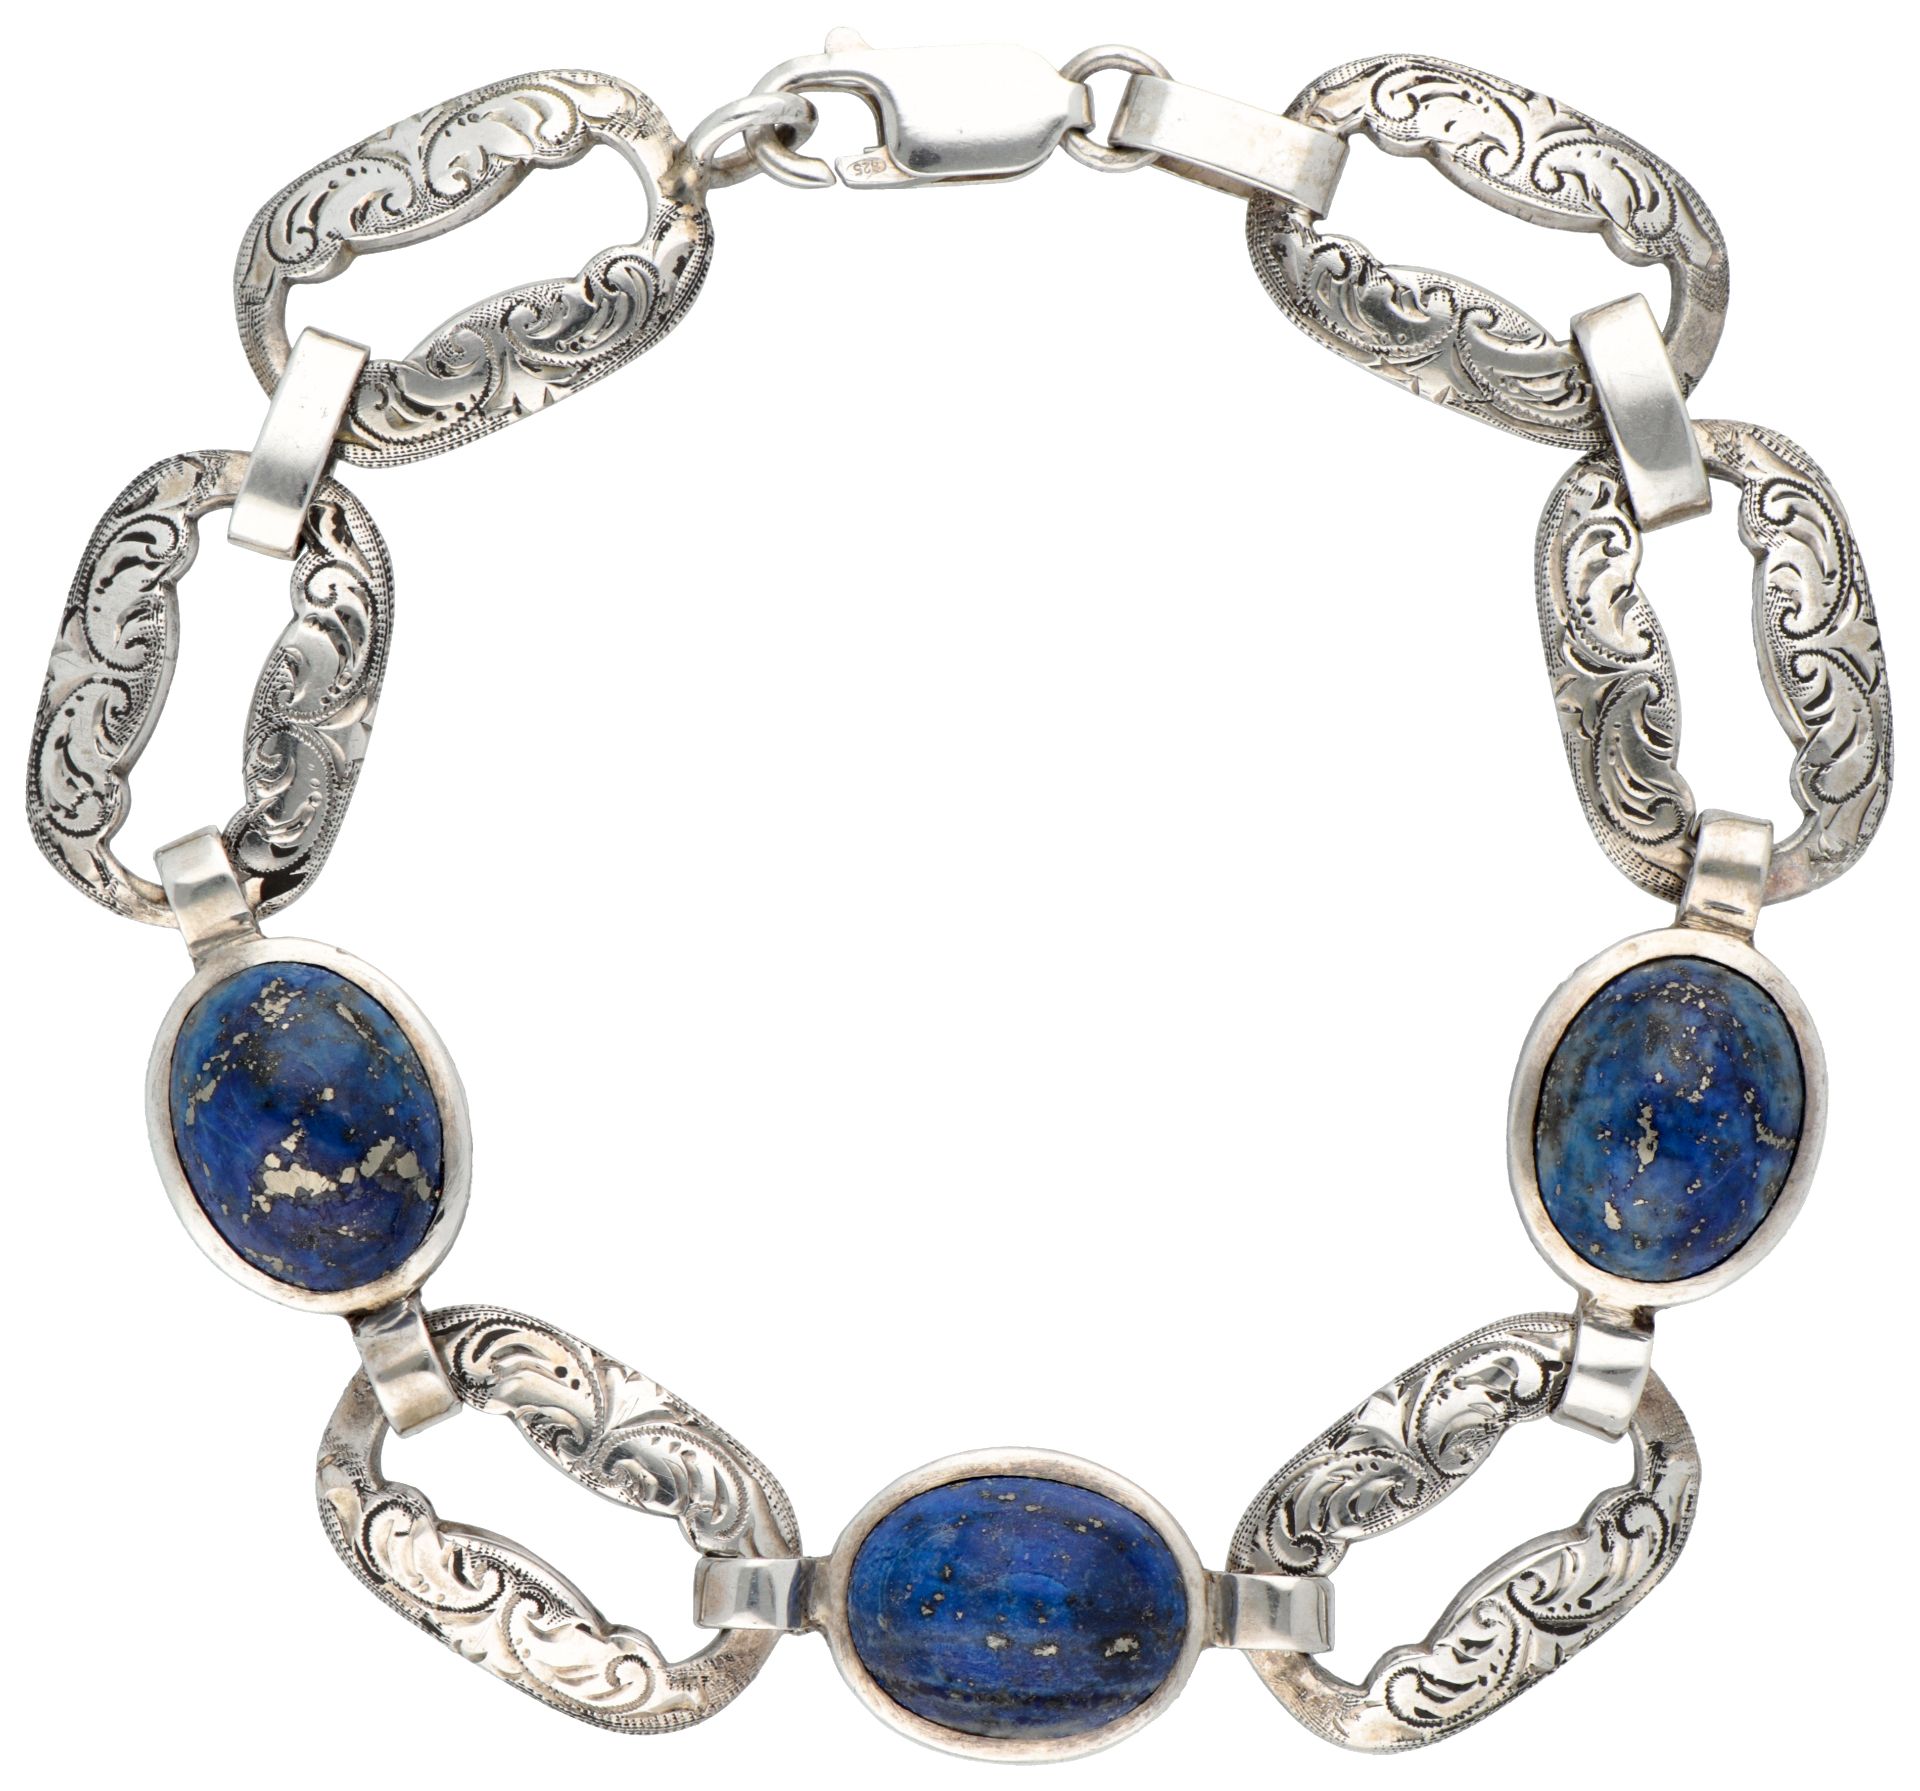 Silver link bracelet with lapis lazuli